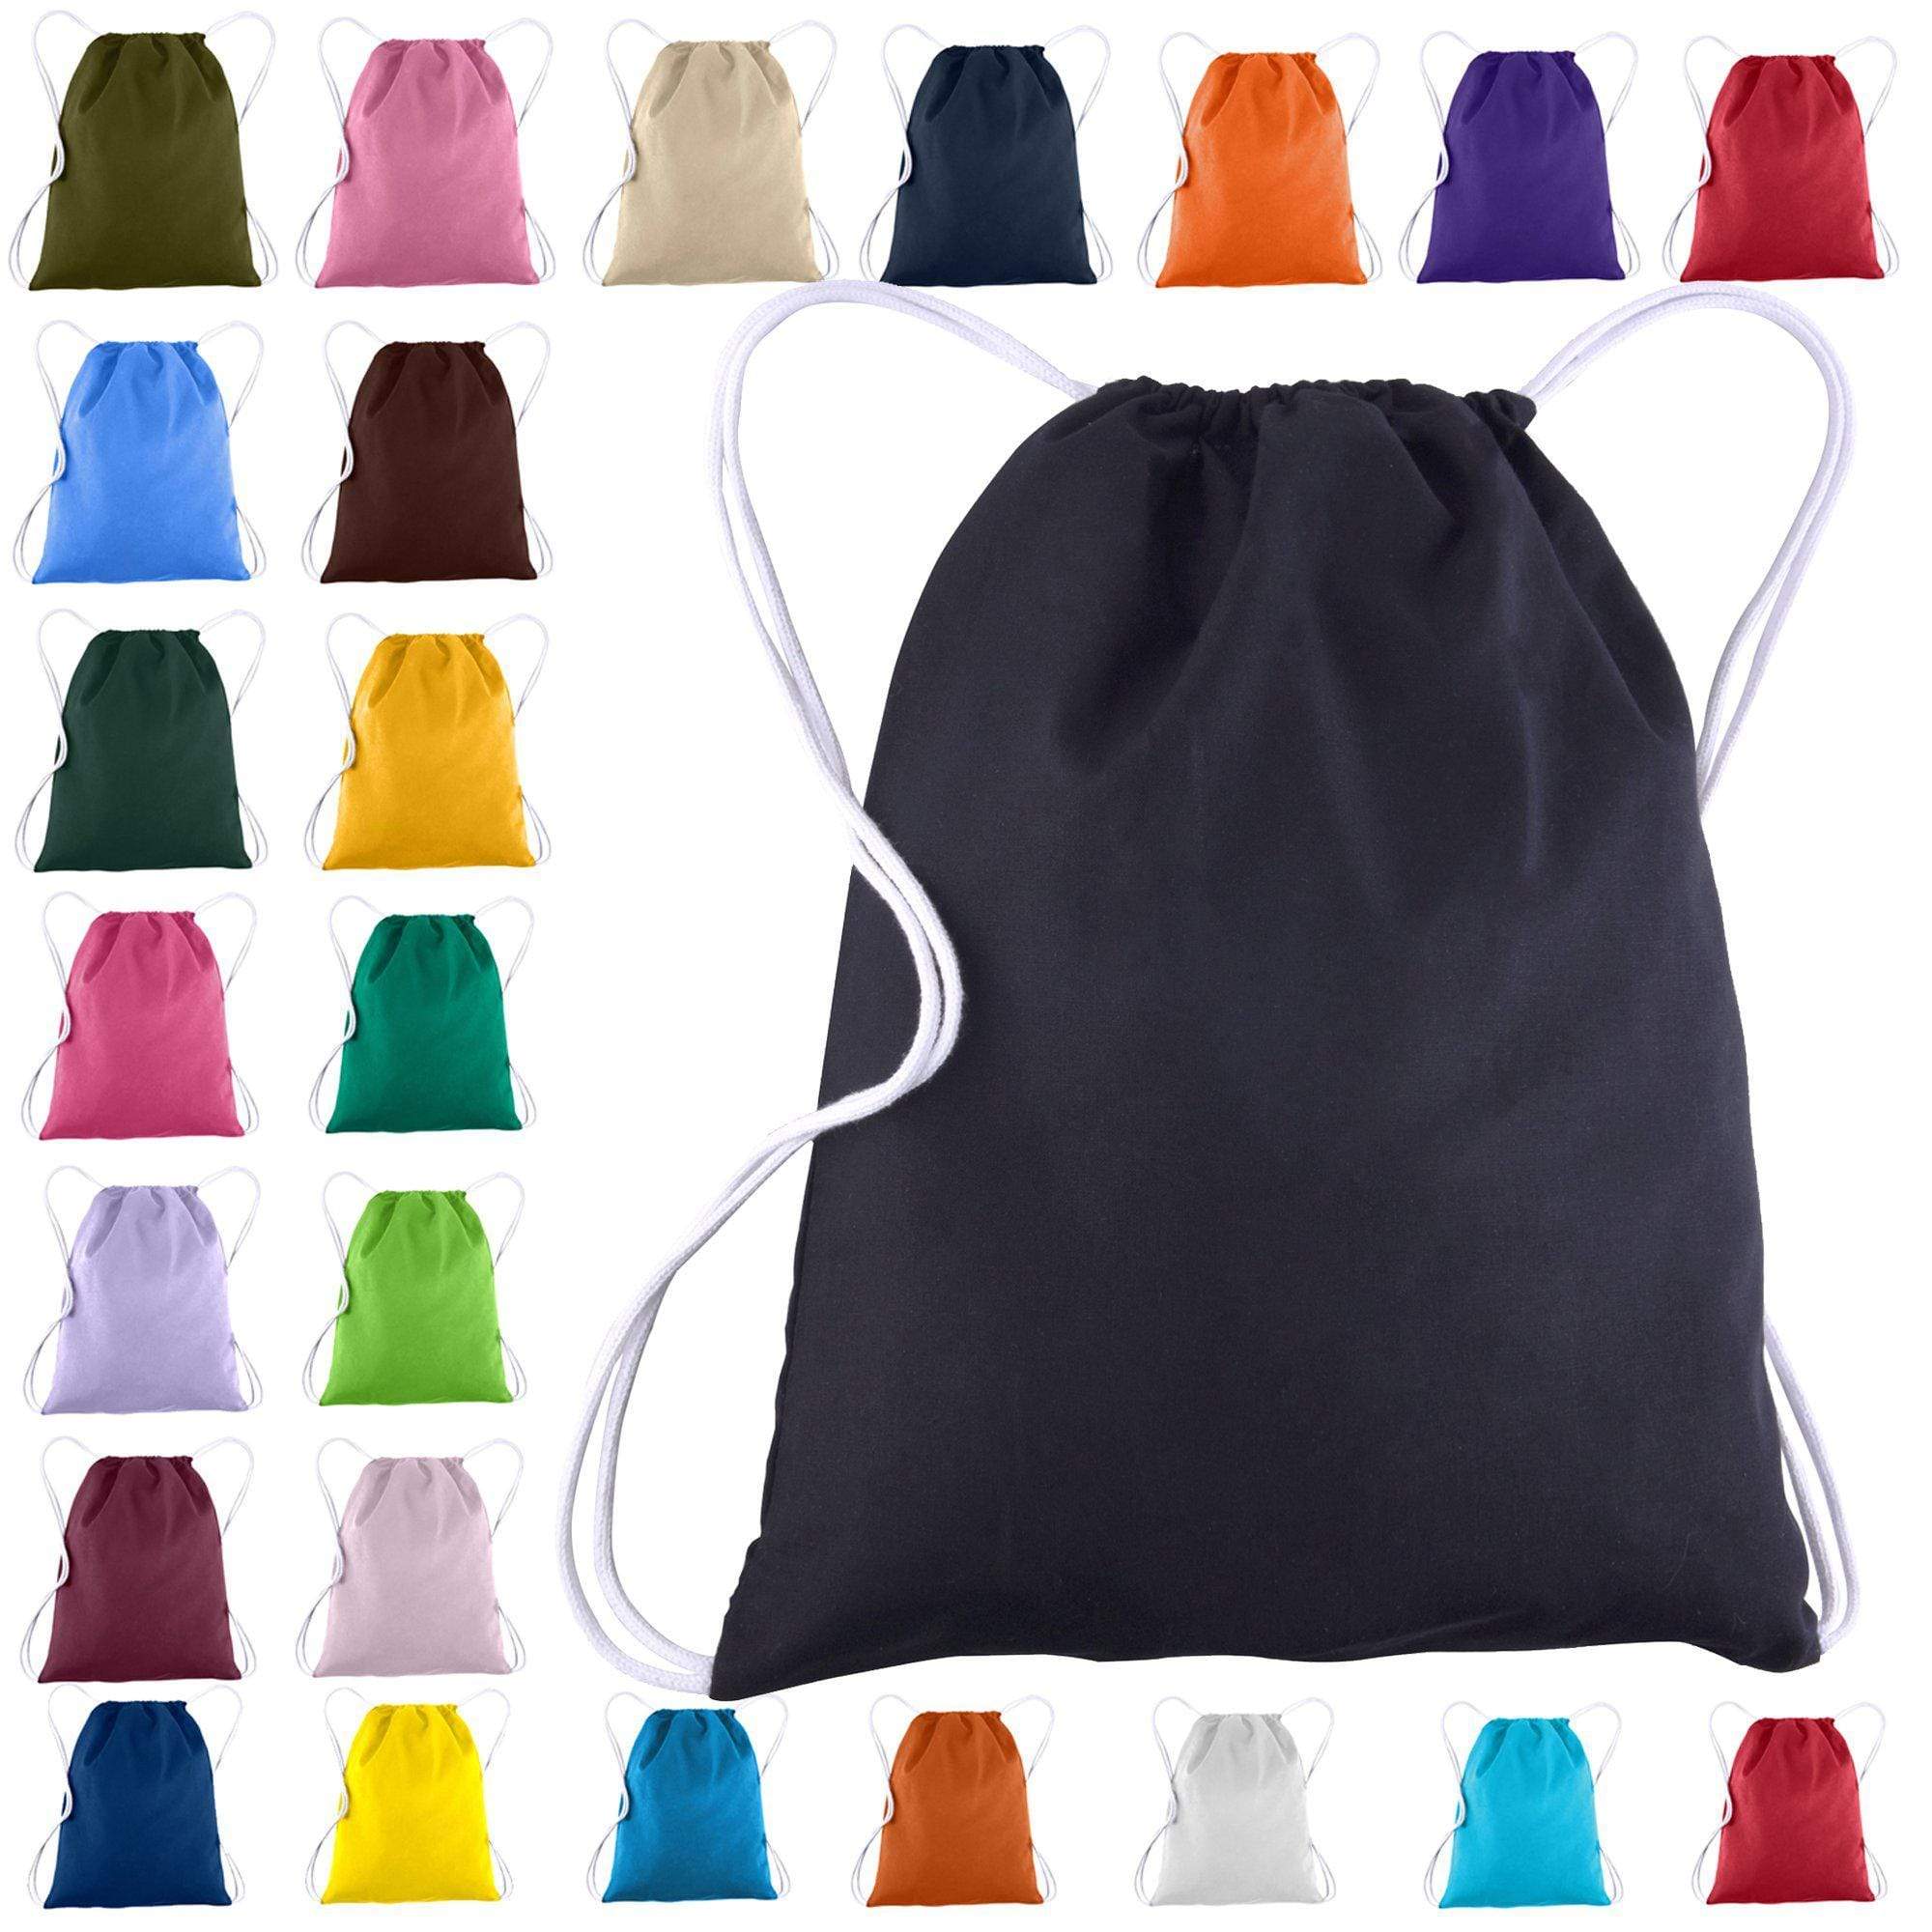 Wholesale Cotton Canvas Drawstring Backpacks and Cheap Drawstring Bags – BagzDepot™